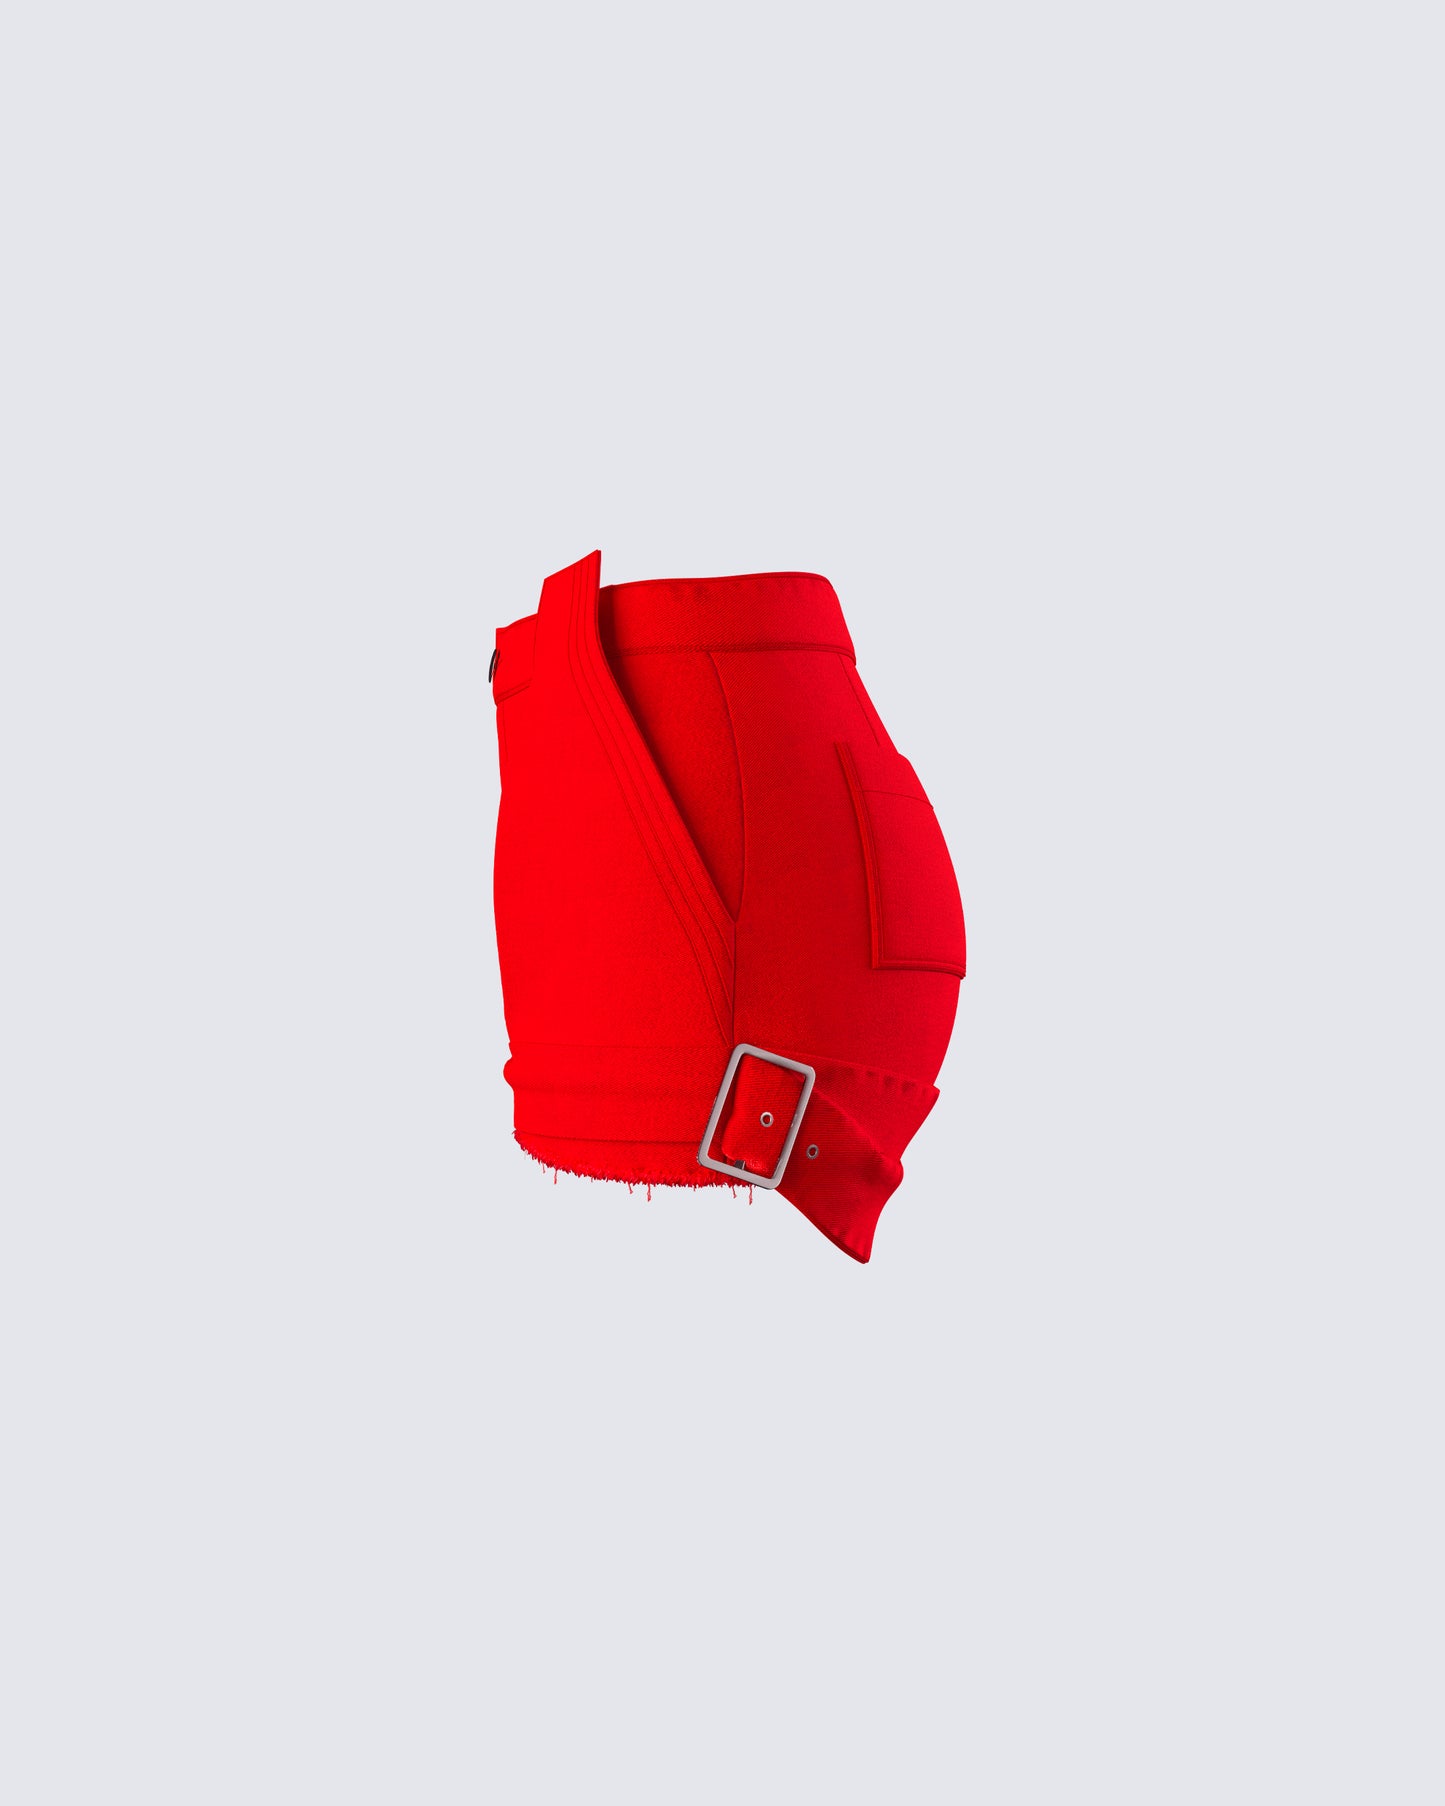 Brielle Red Mini Skirt